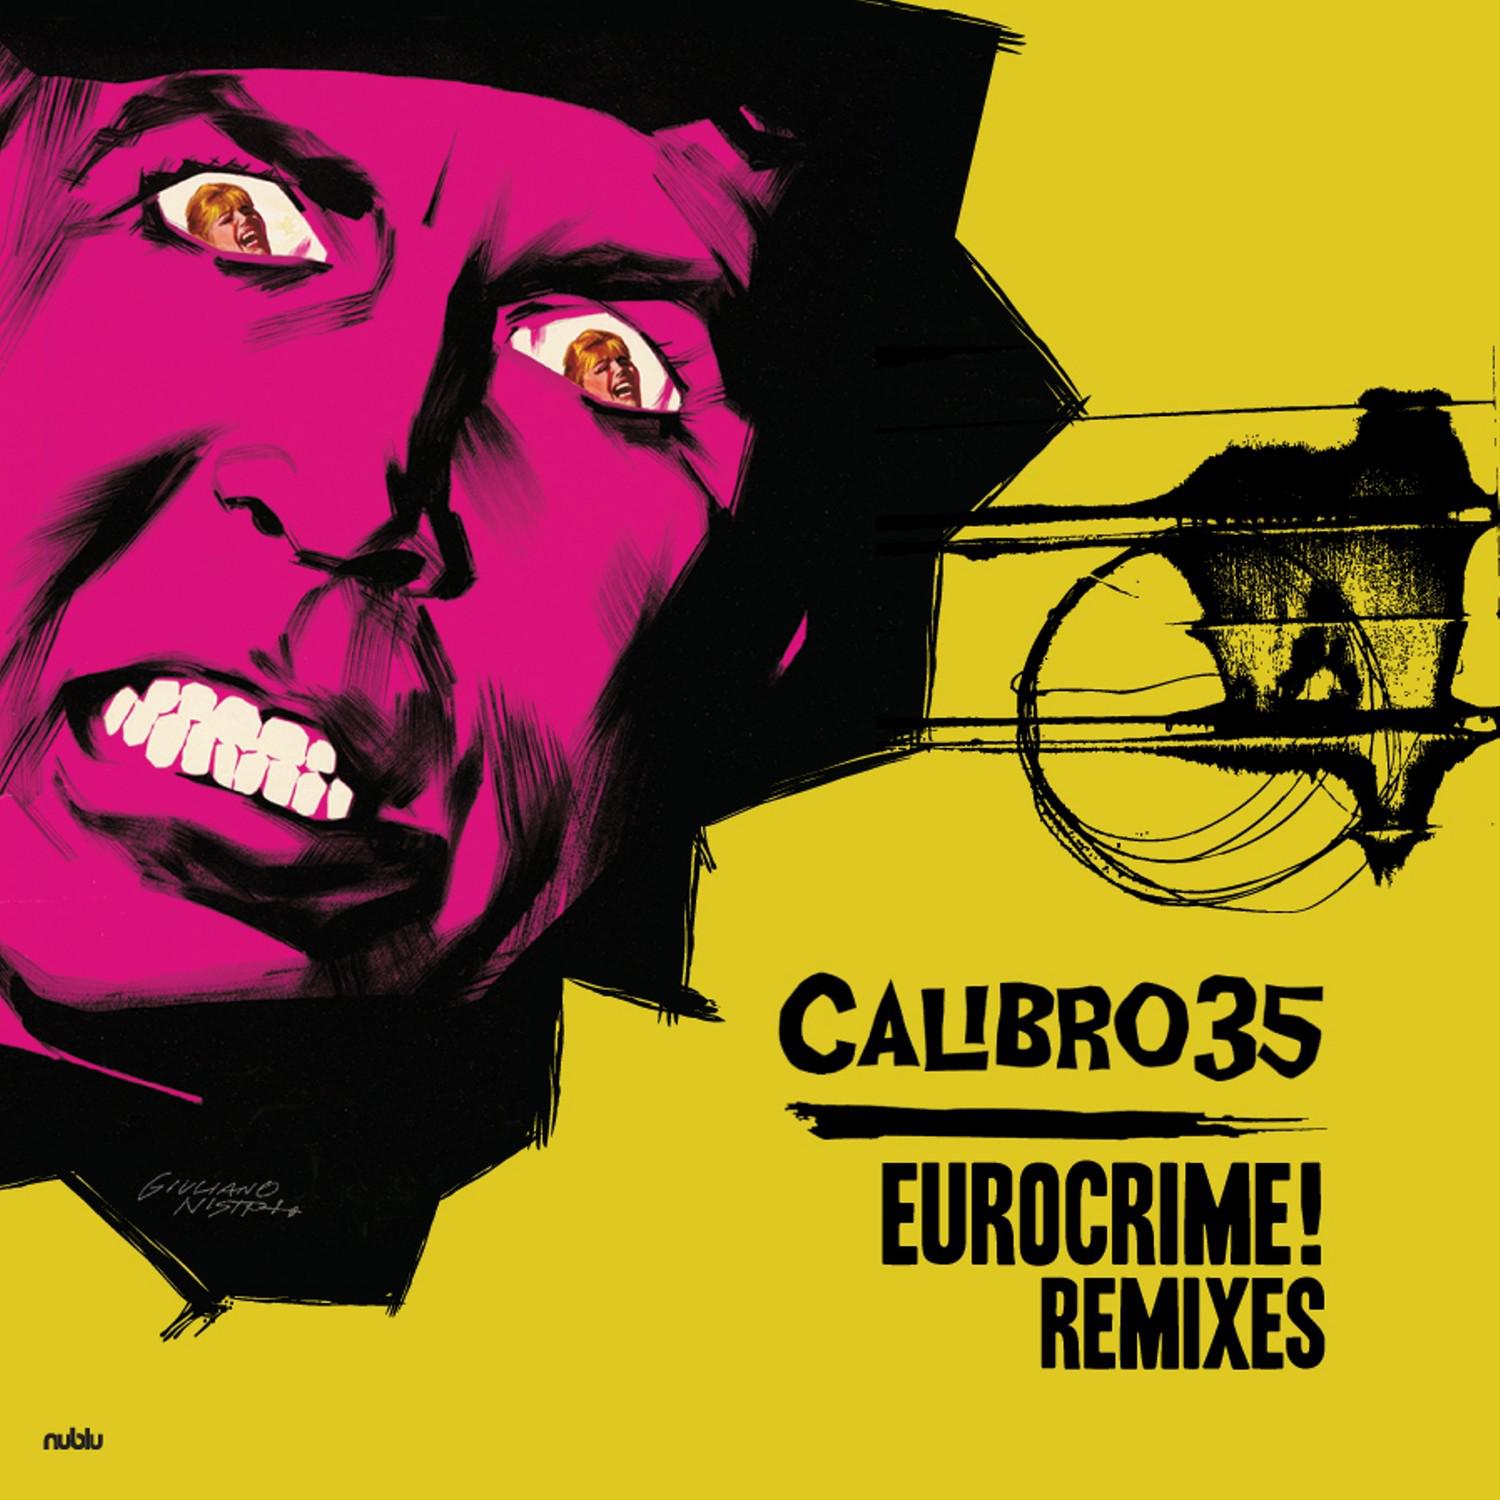 Eurocrime! Remixes